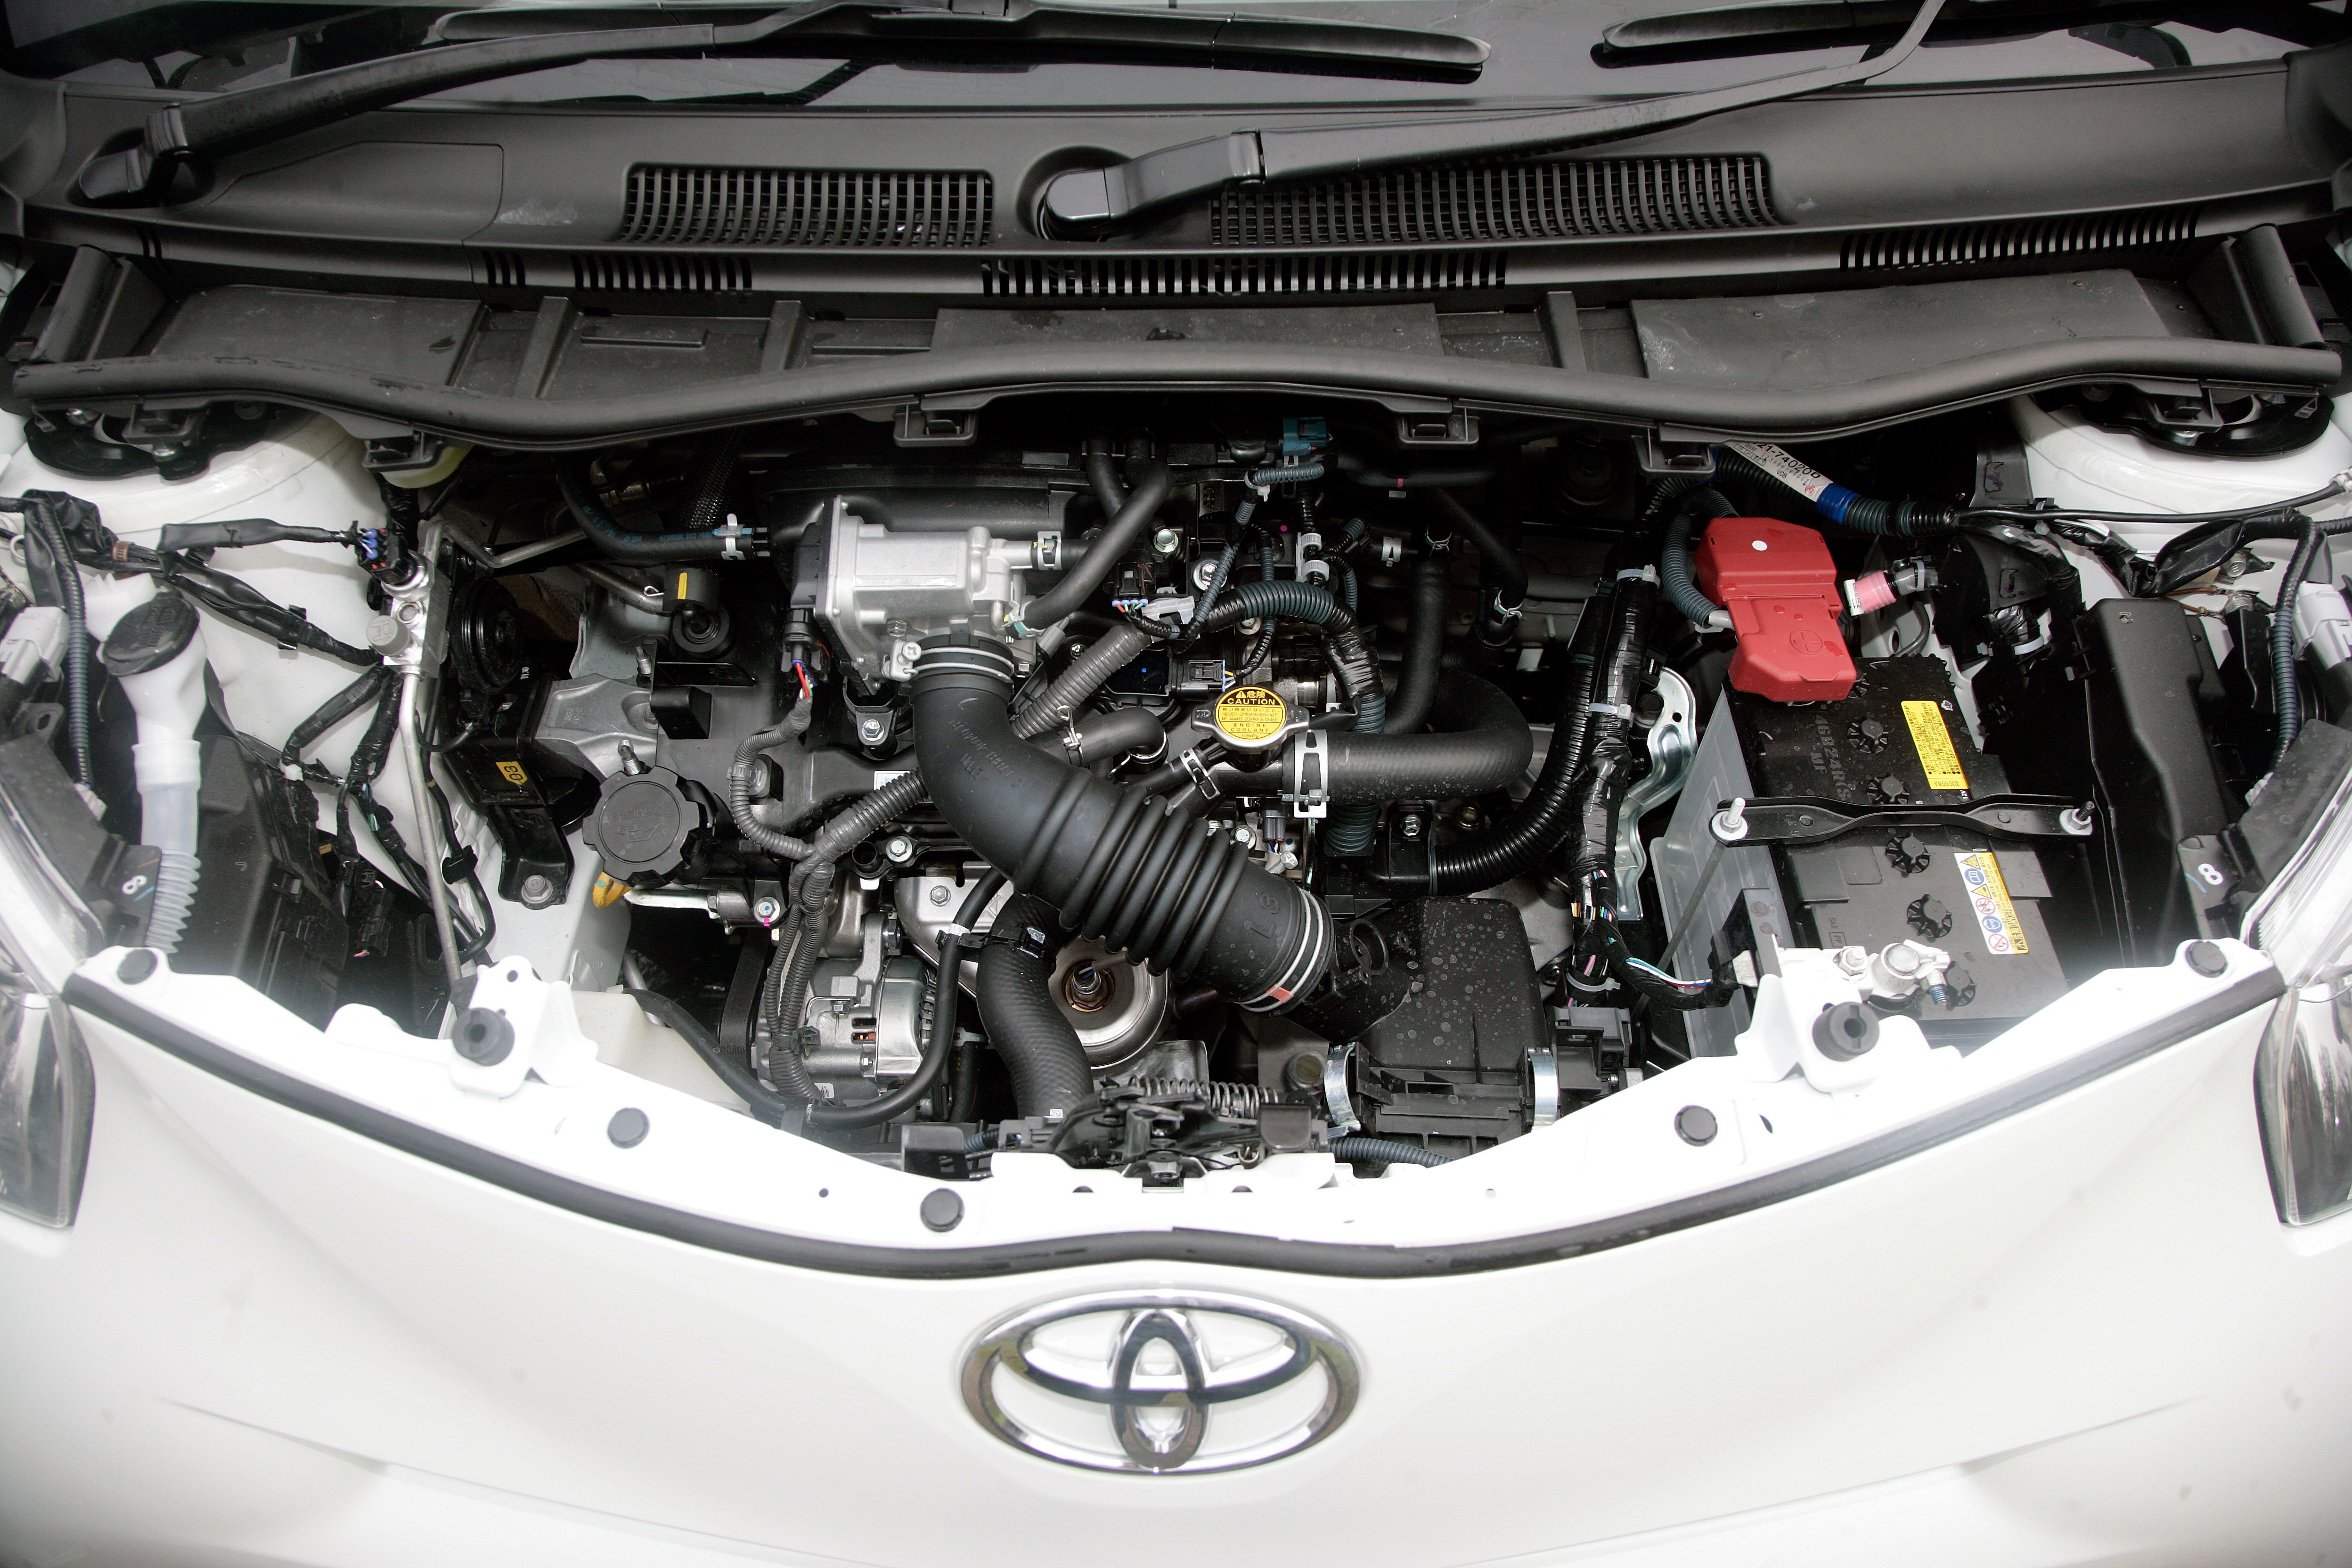 Toyota iQ engine bay